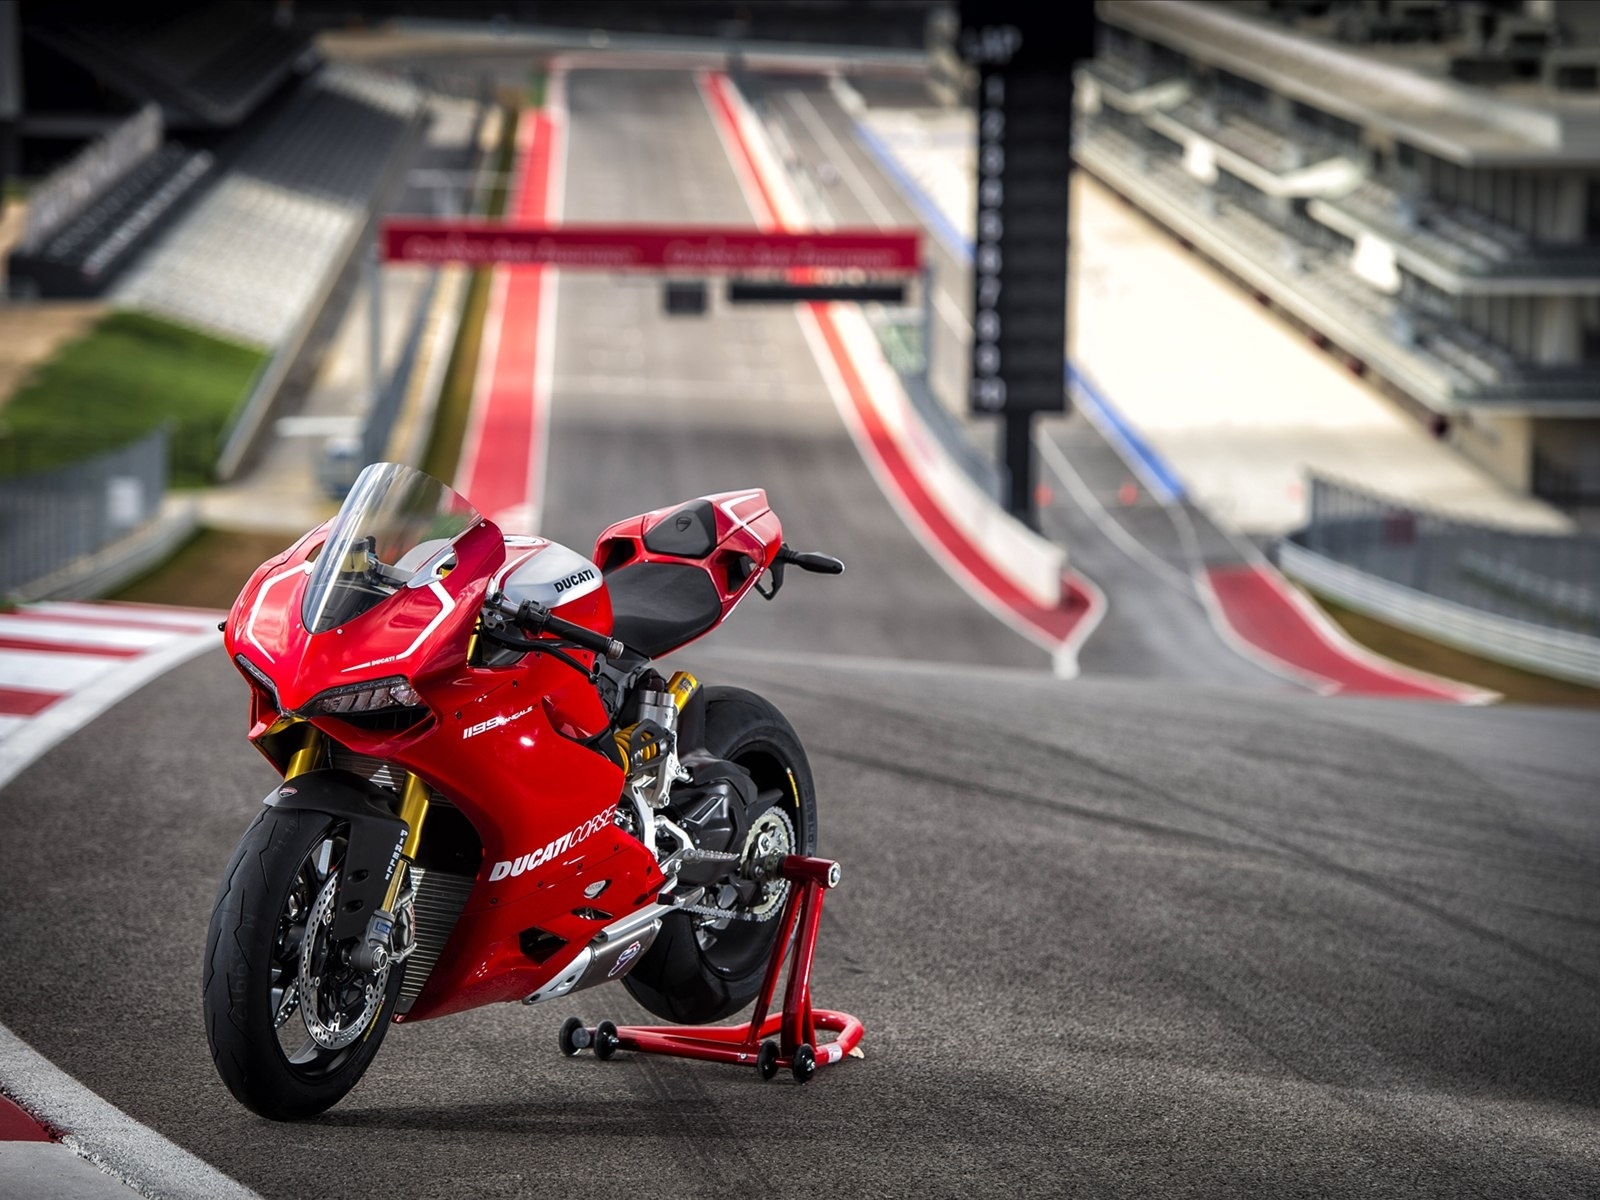 Ducati Superbike New Photos